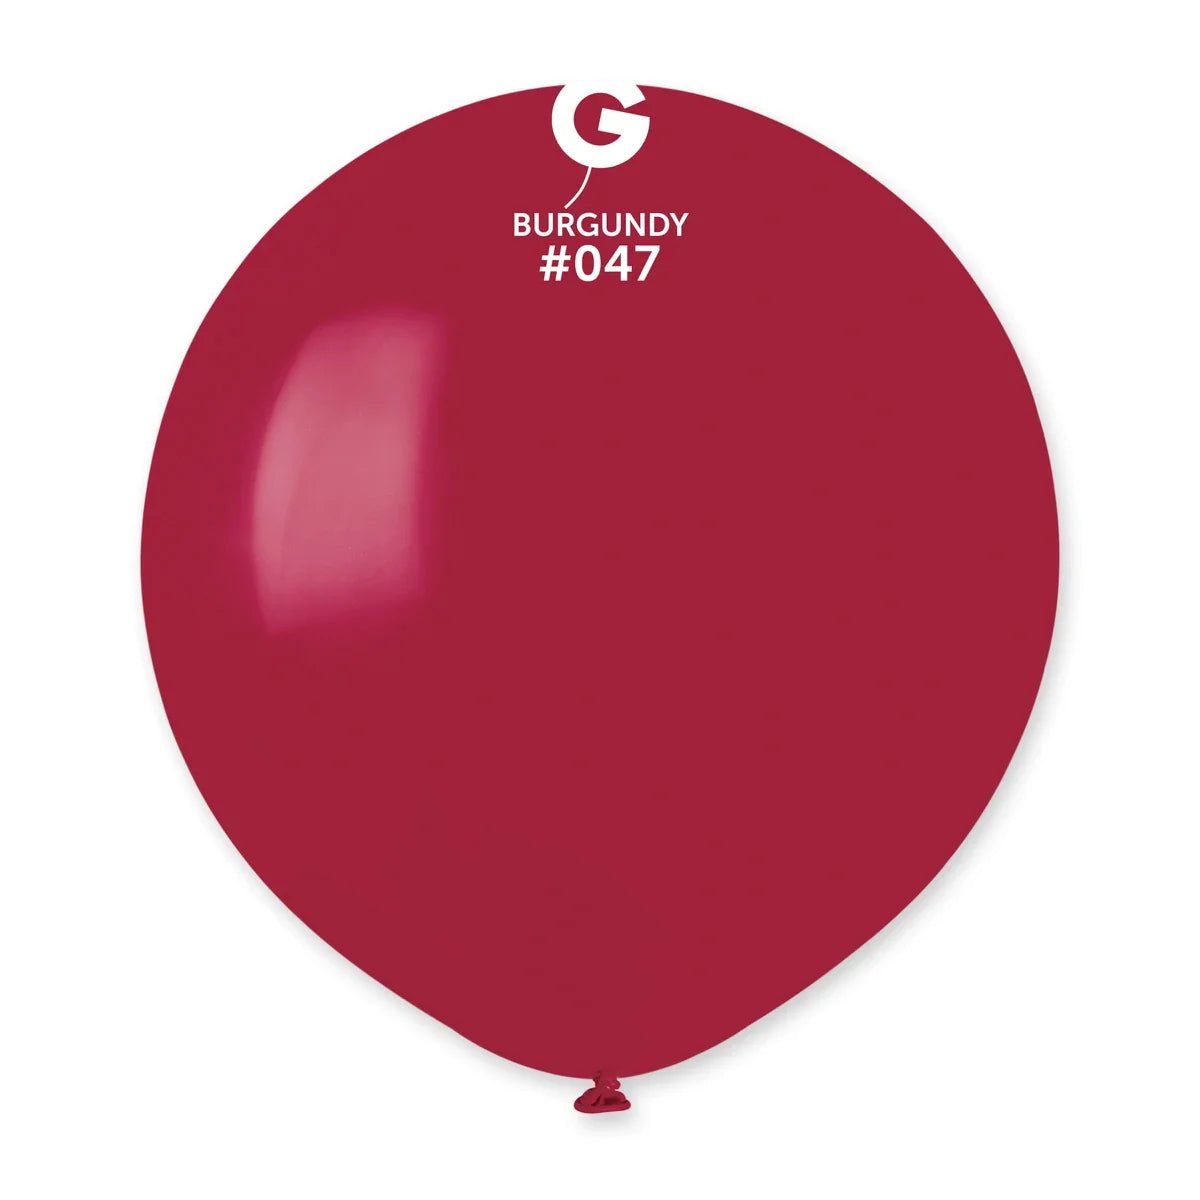 19" Standard Latex Balloon, 1 Count